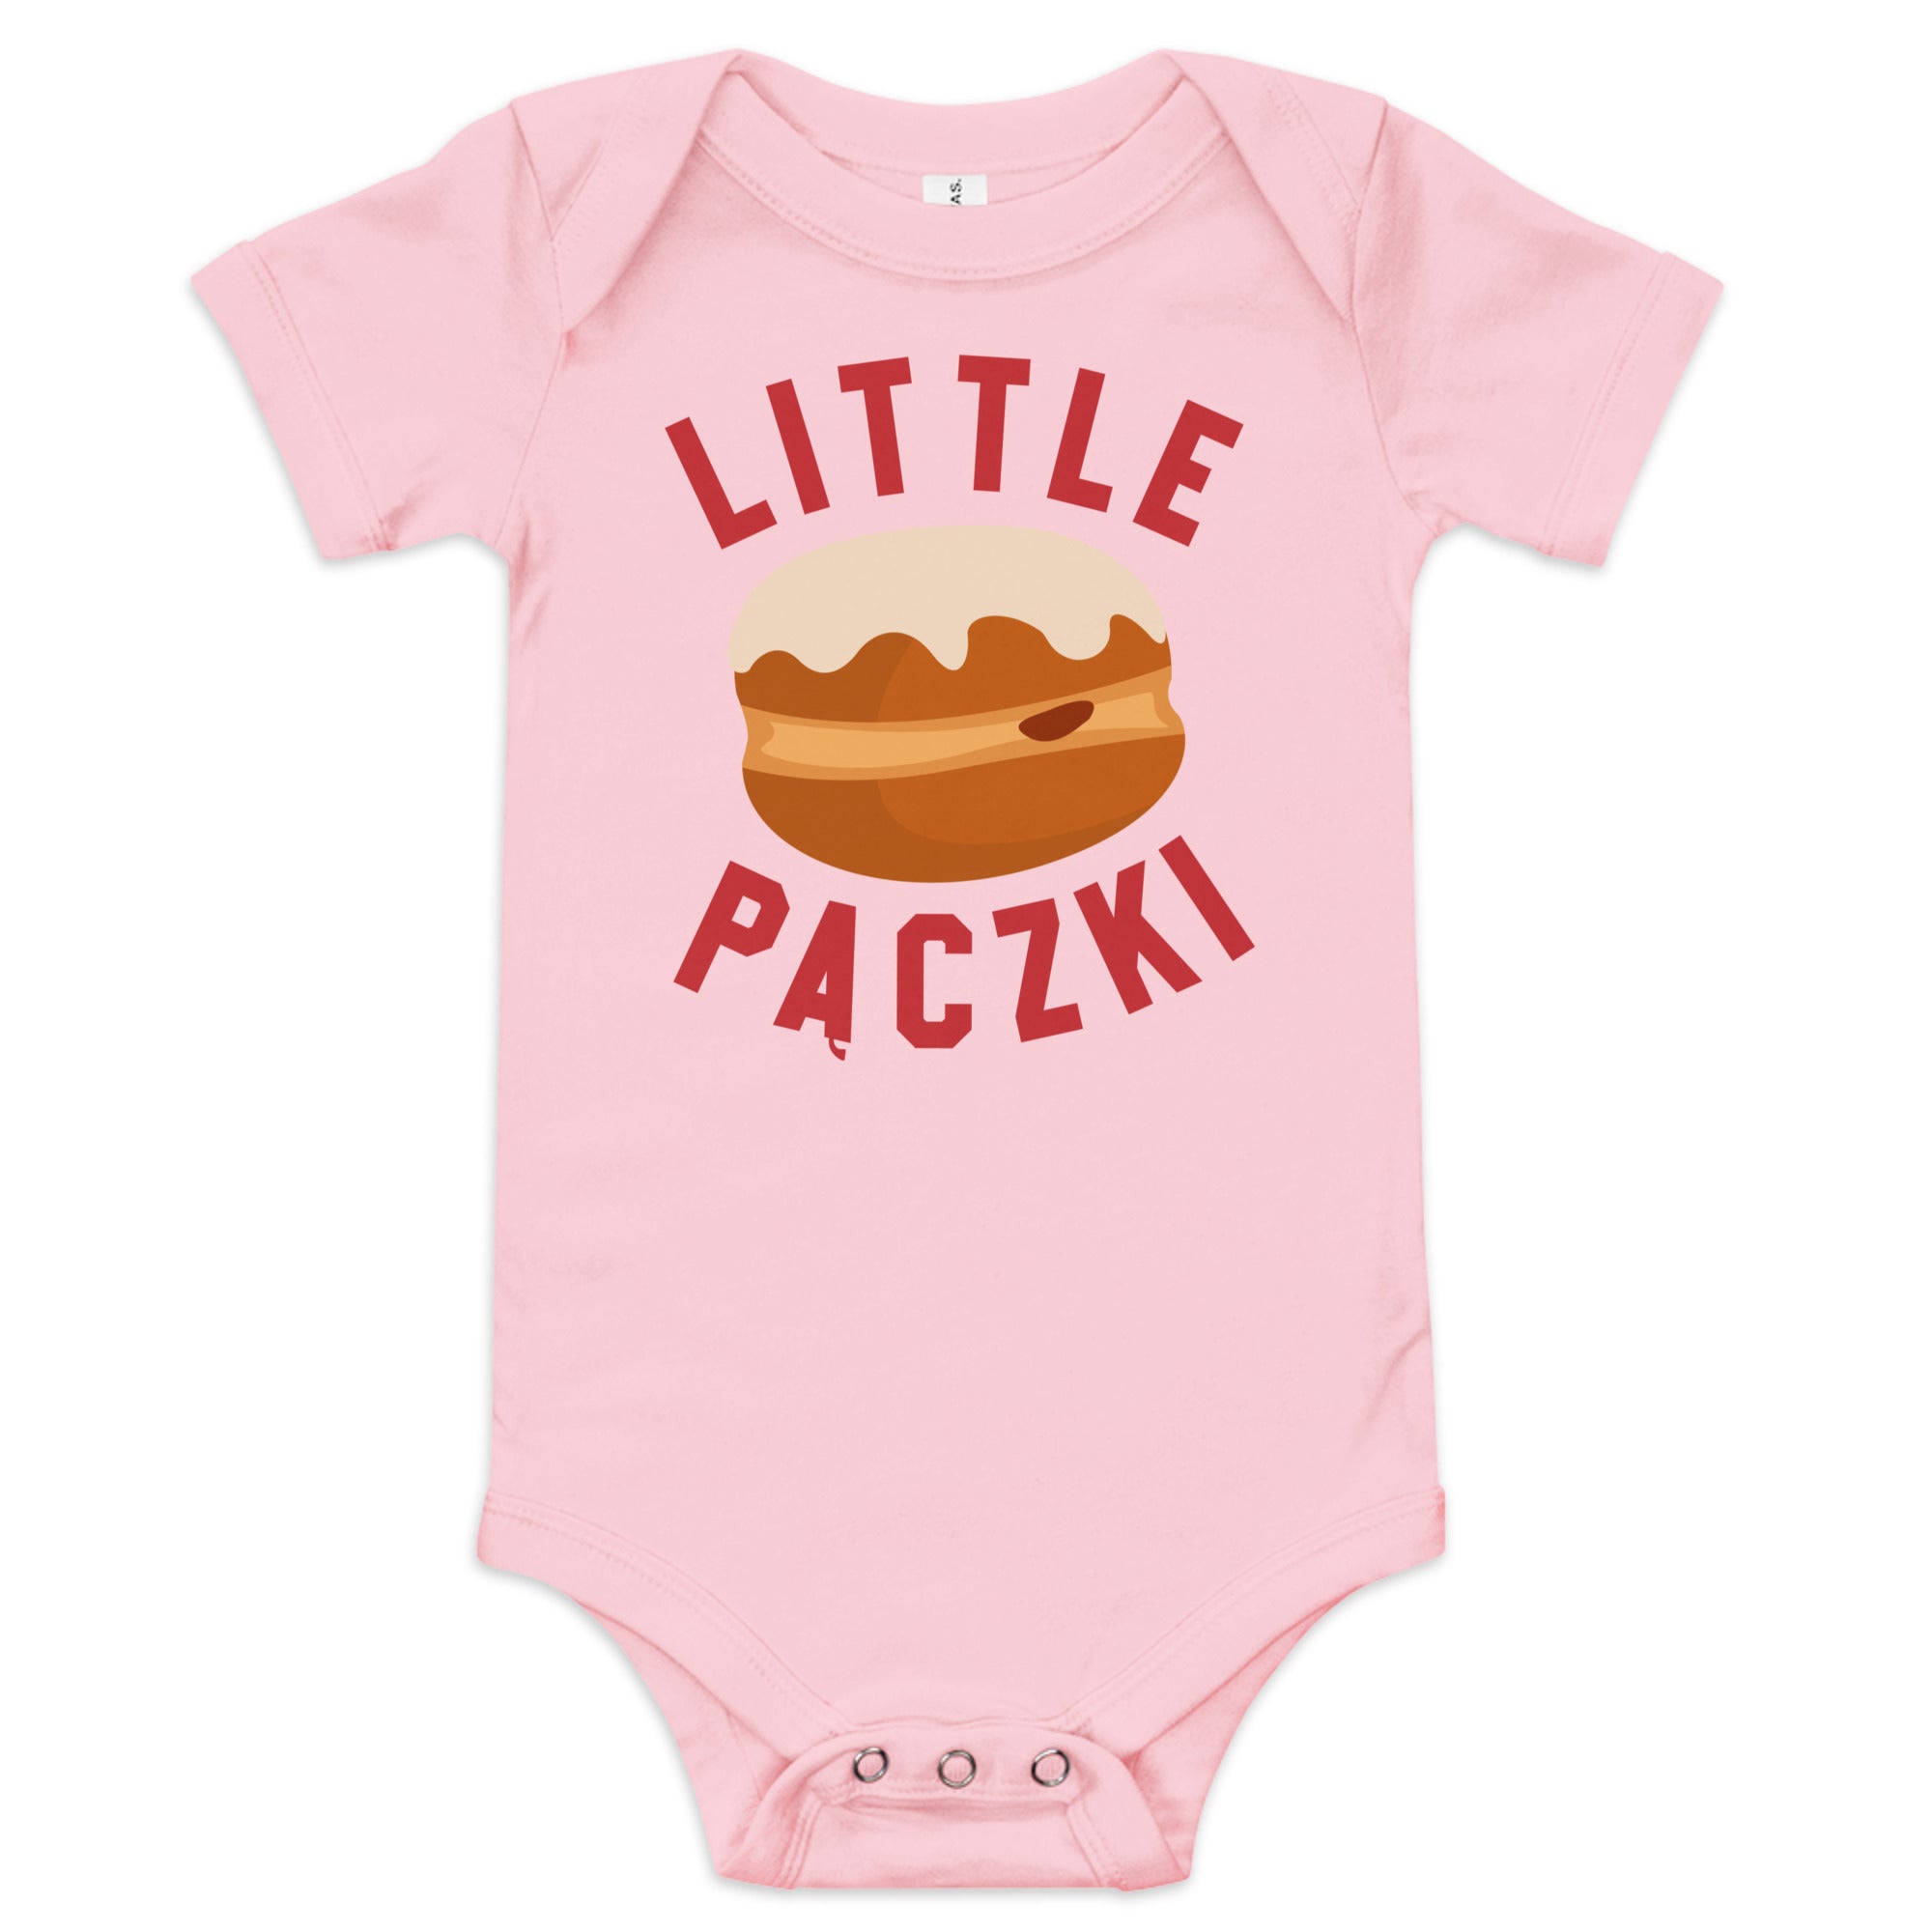 Little Paczki - Baby Onsie - Red / Pink  3-6m  